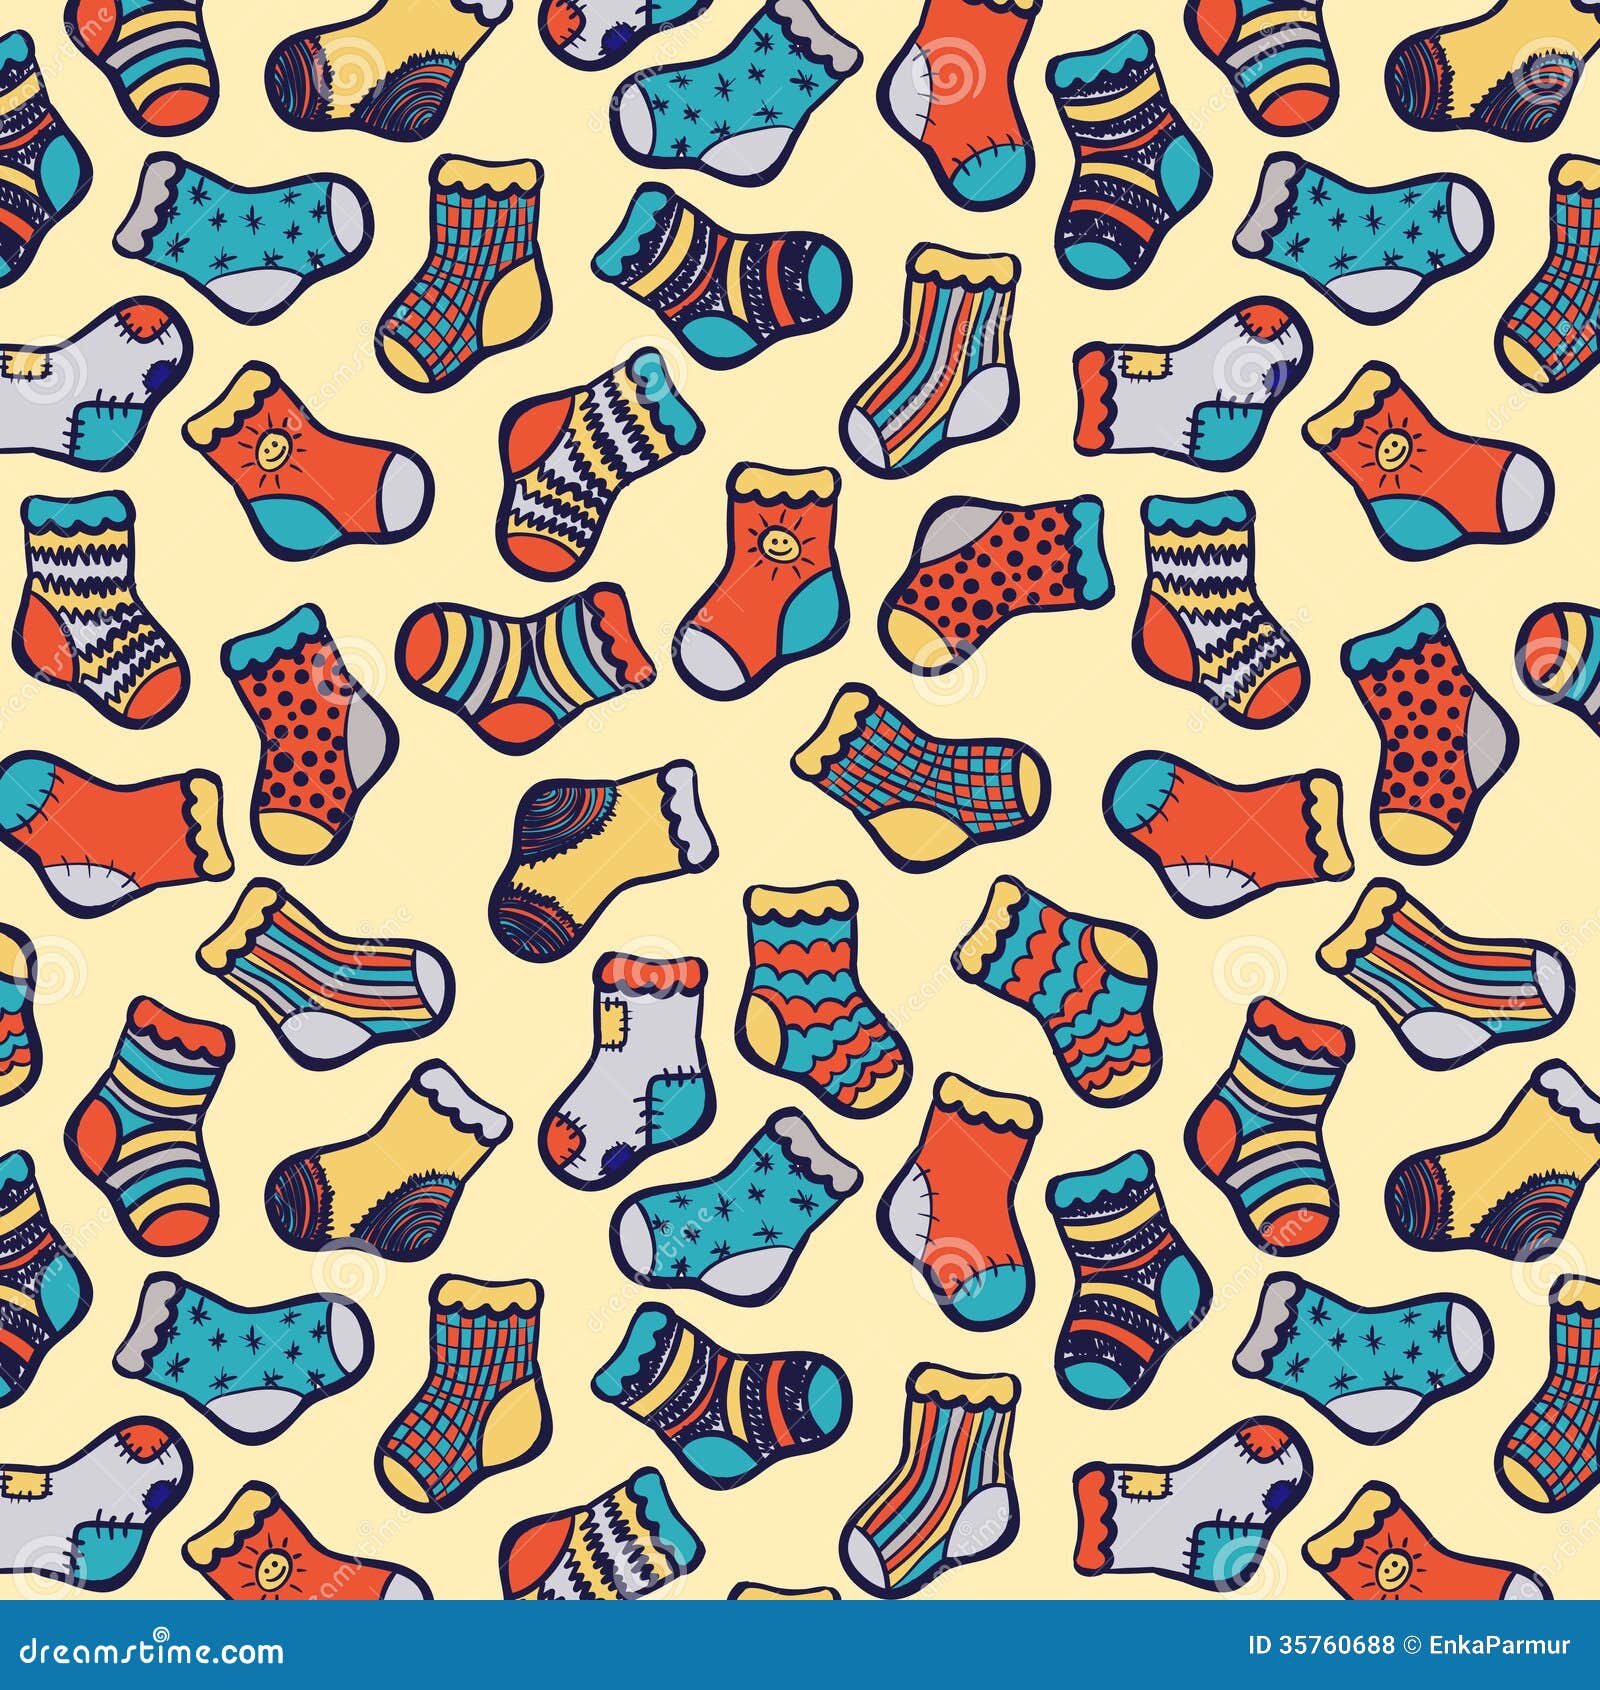 Wallpaper : socks, nail, material, hats, shoe, textile 4272x1891 - - 856899  - HD Wallpapers - WallHere